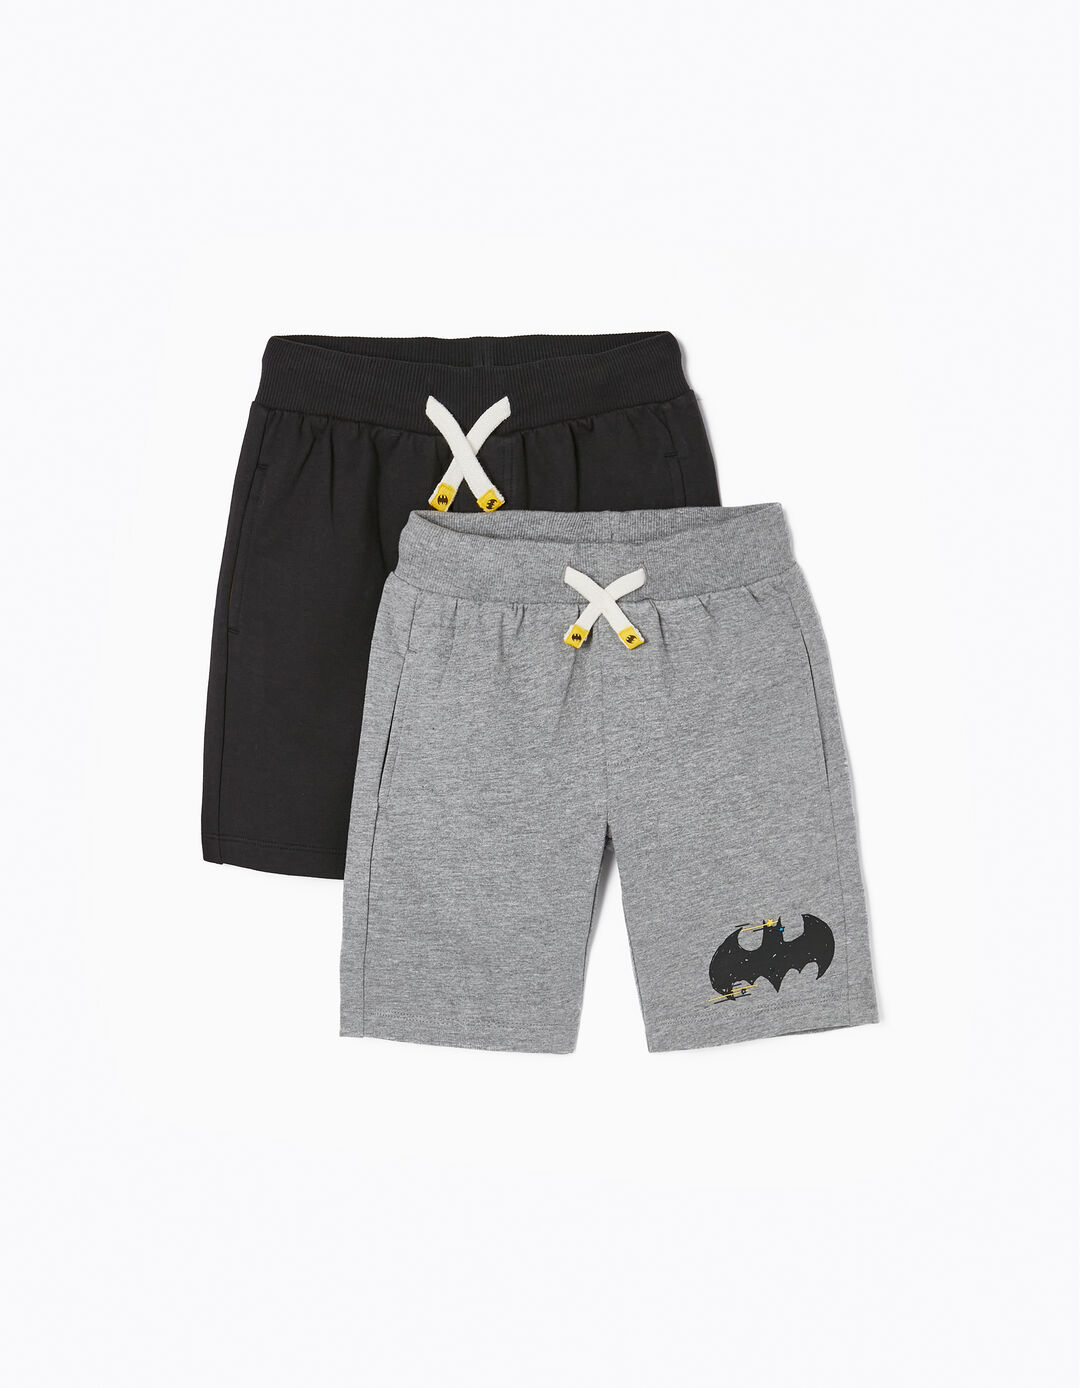 2-Pack Cotton Shorts for Boys 'Batman', Black/Grey